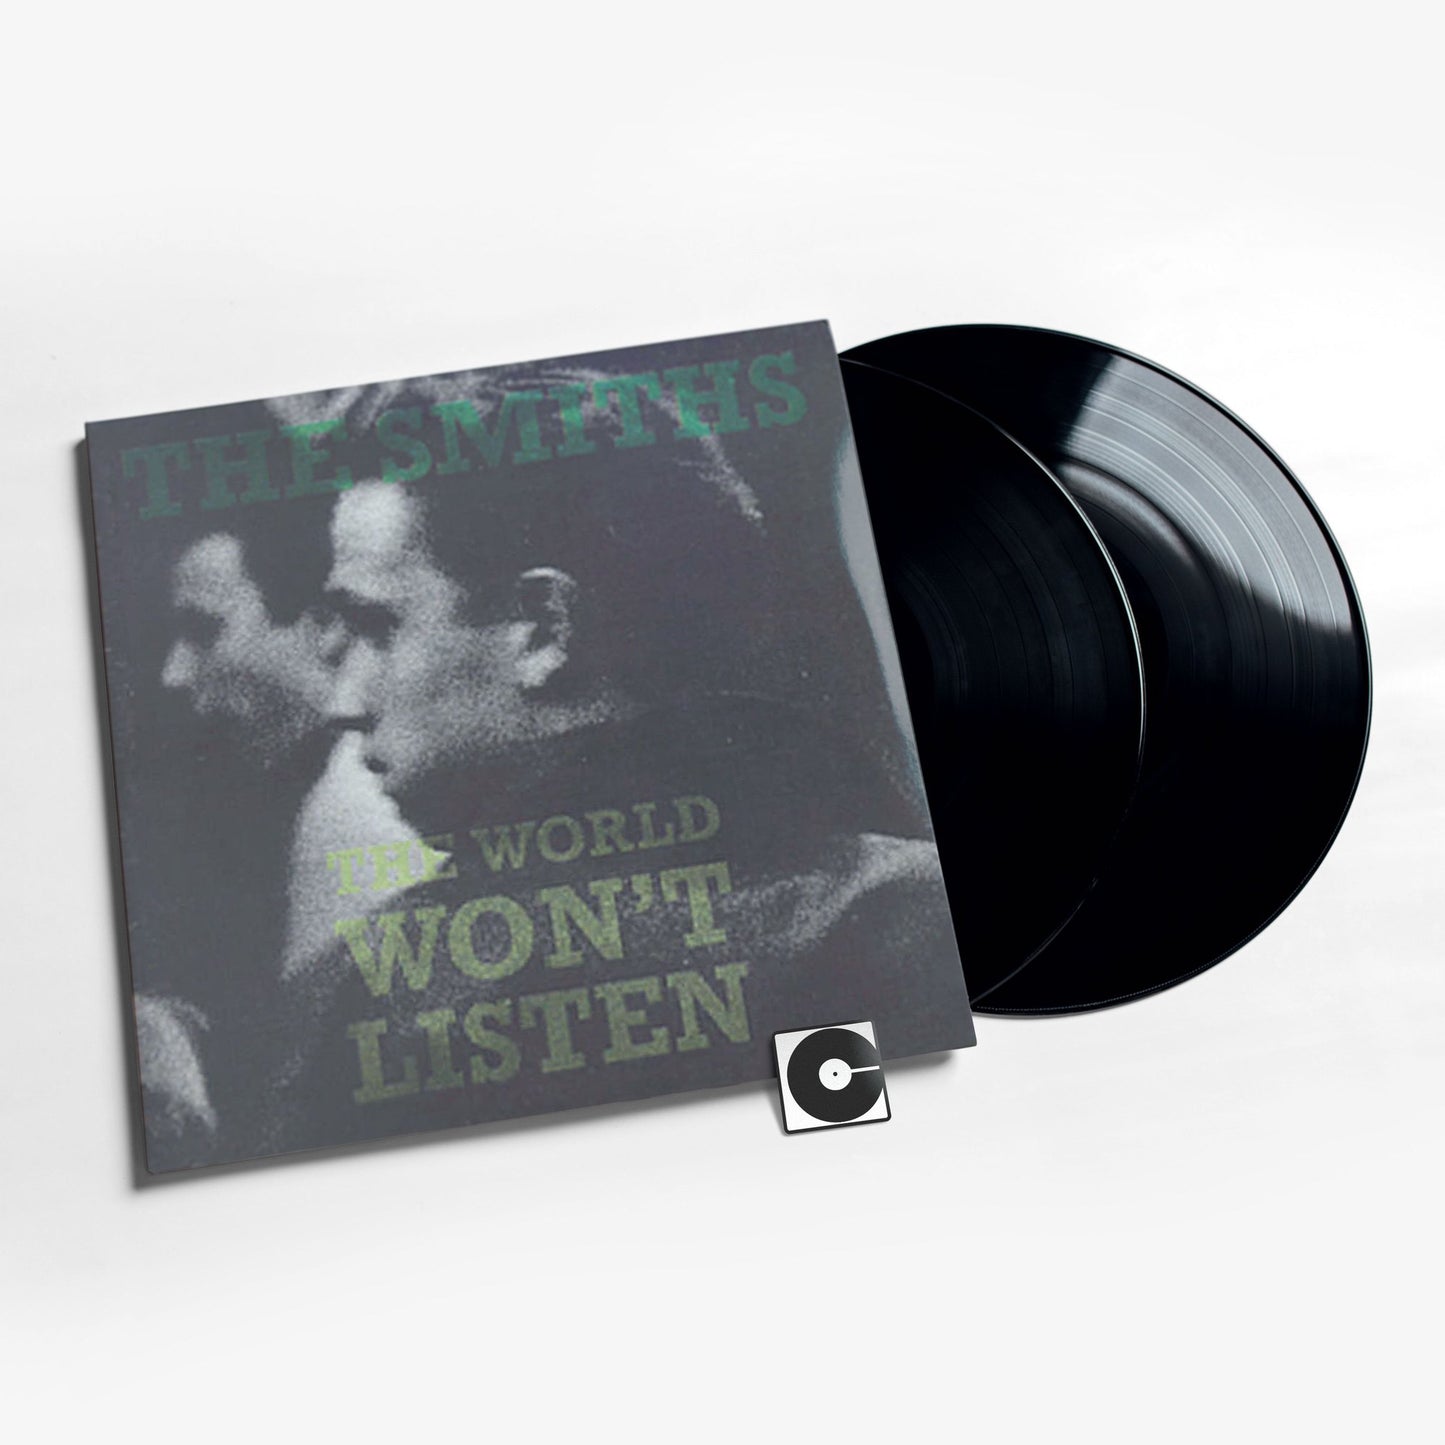 The Smiths - "The World Won't Listen"